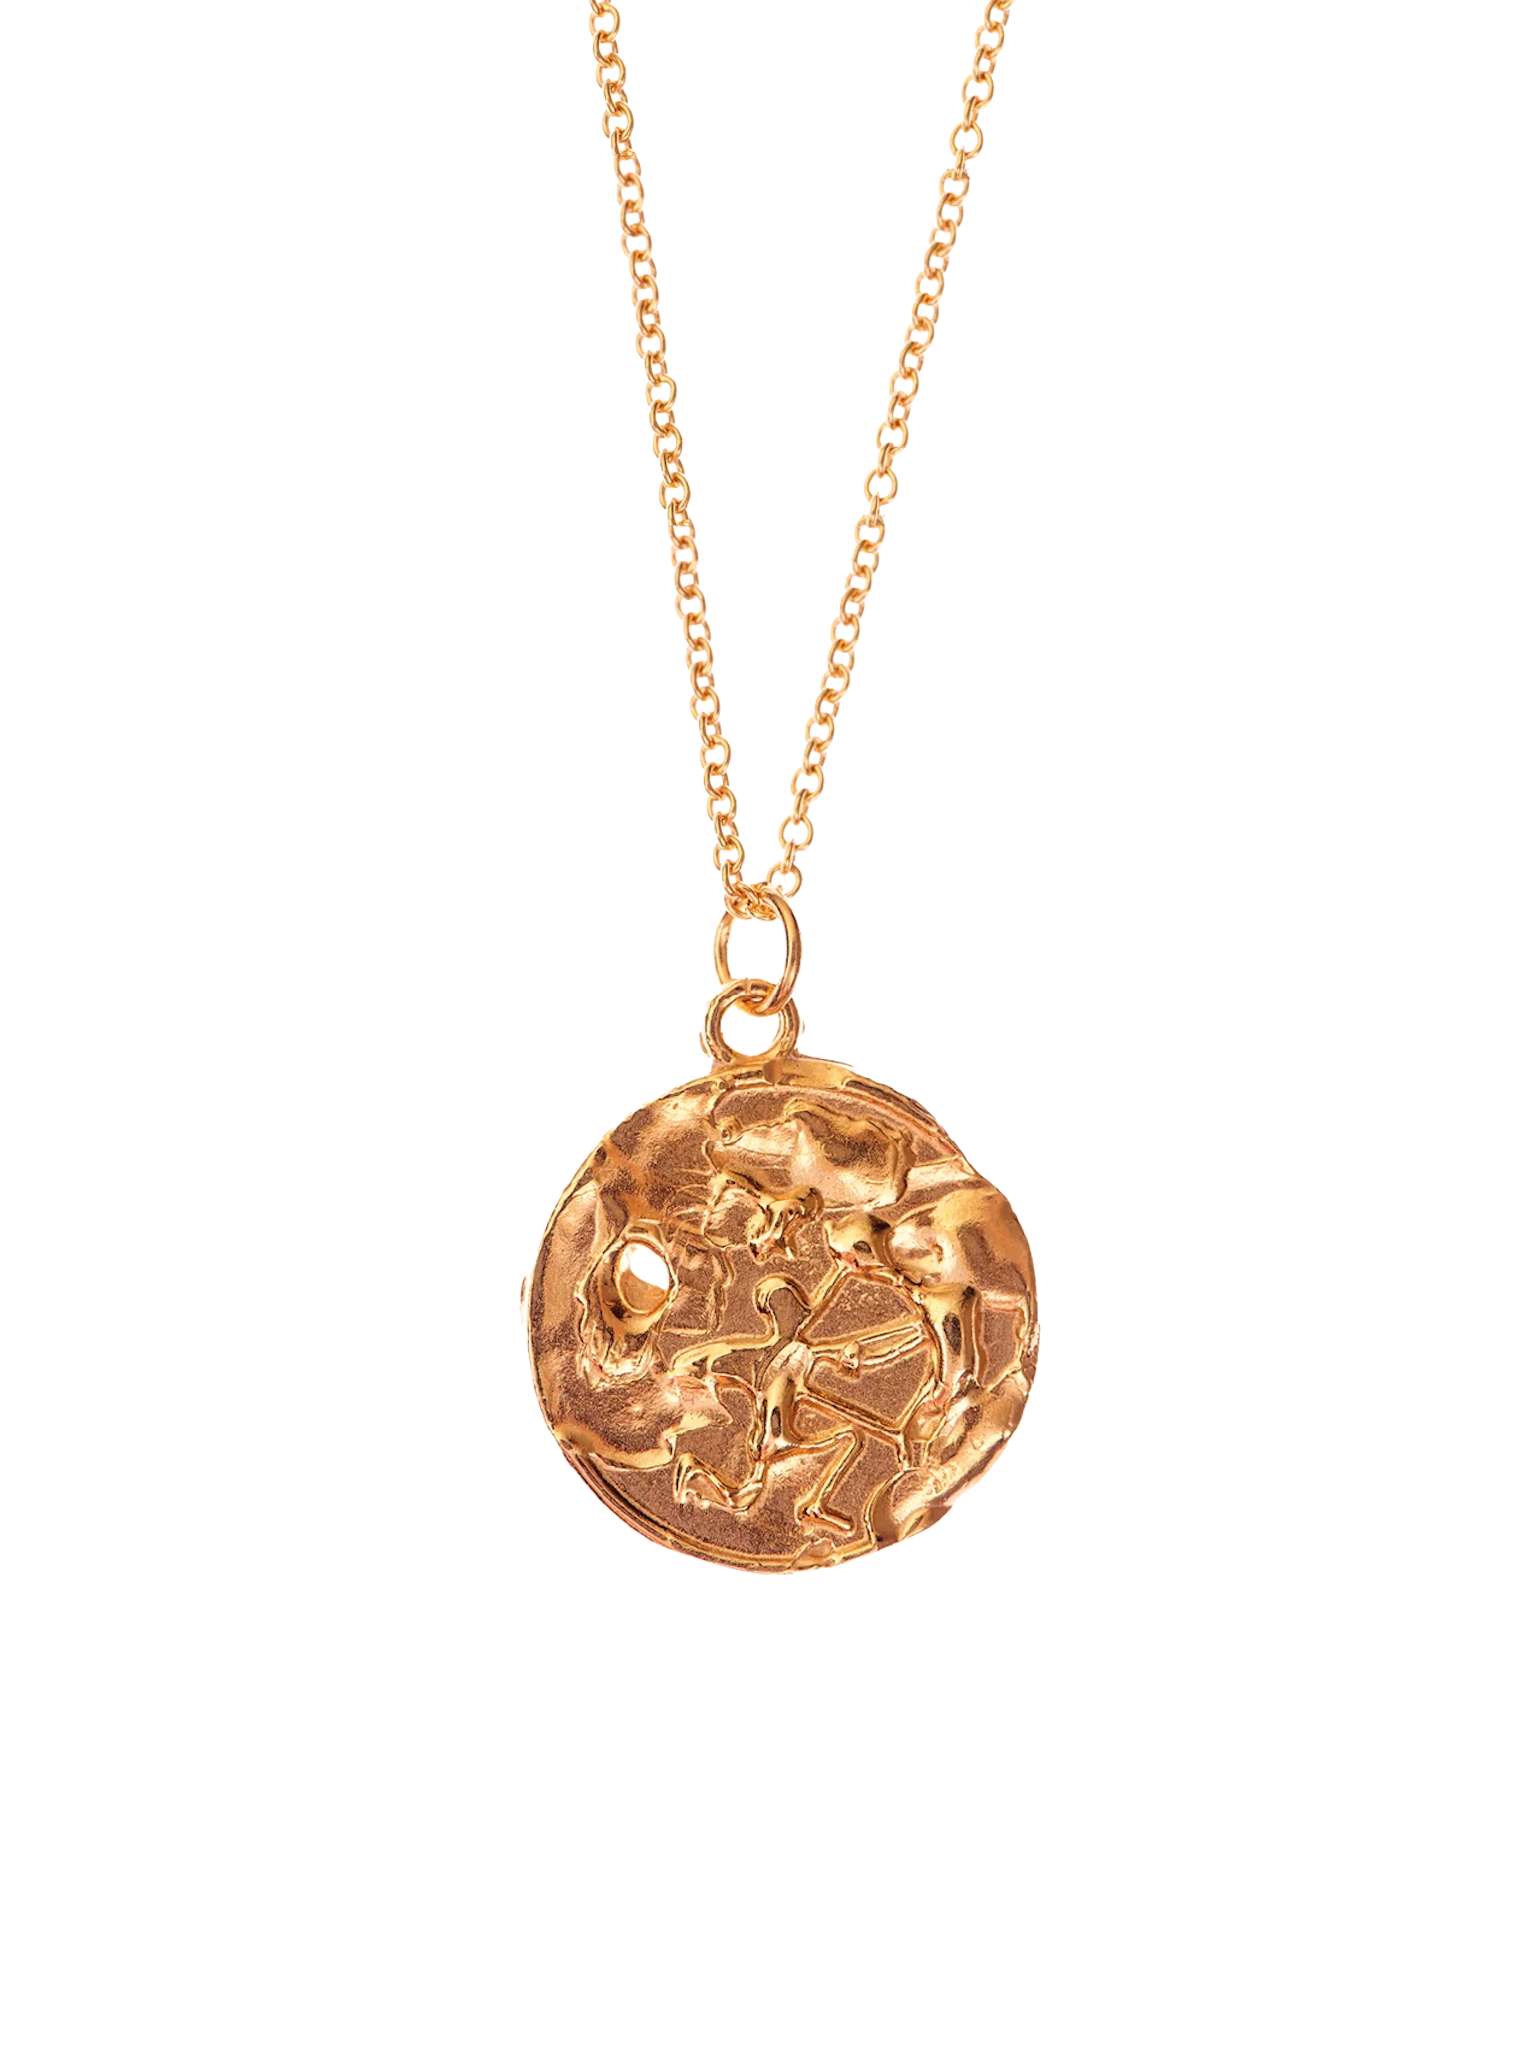 The sagittarius medallion necklace